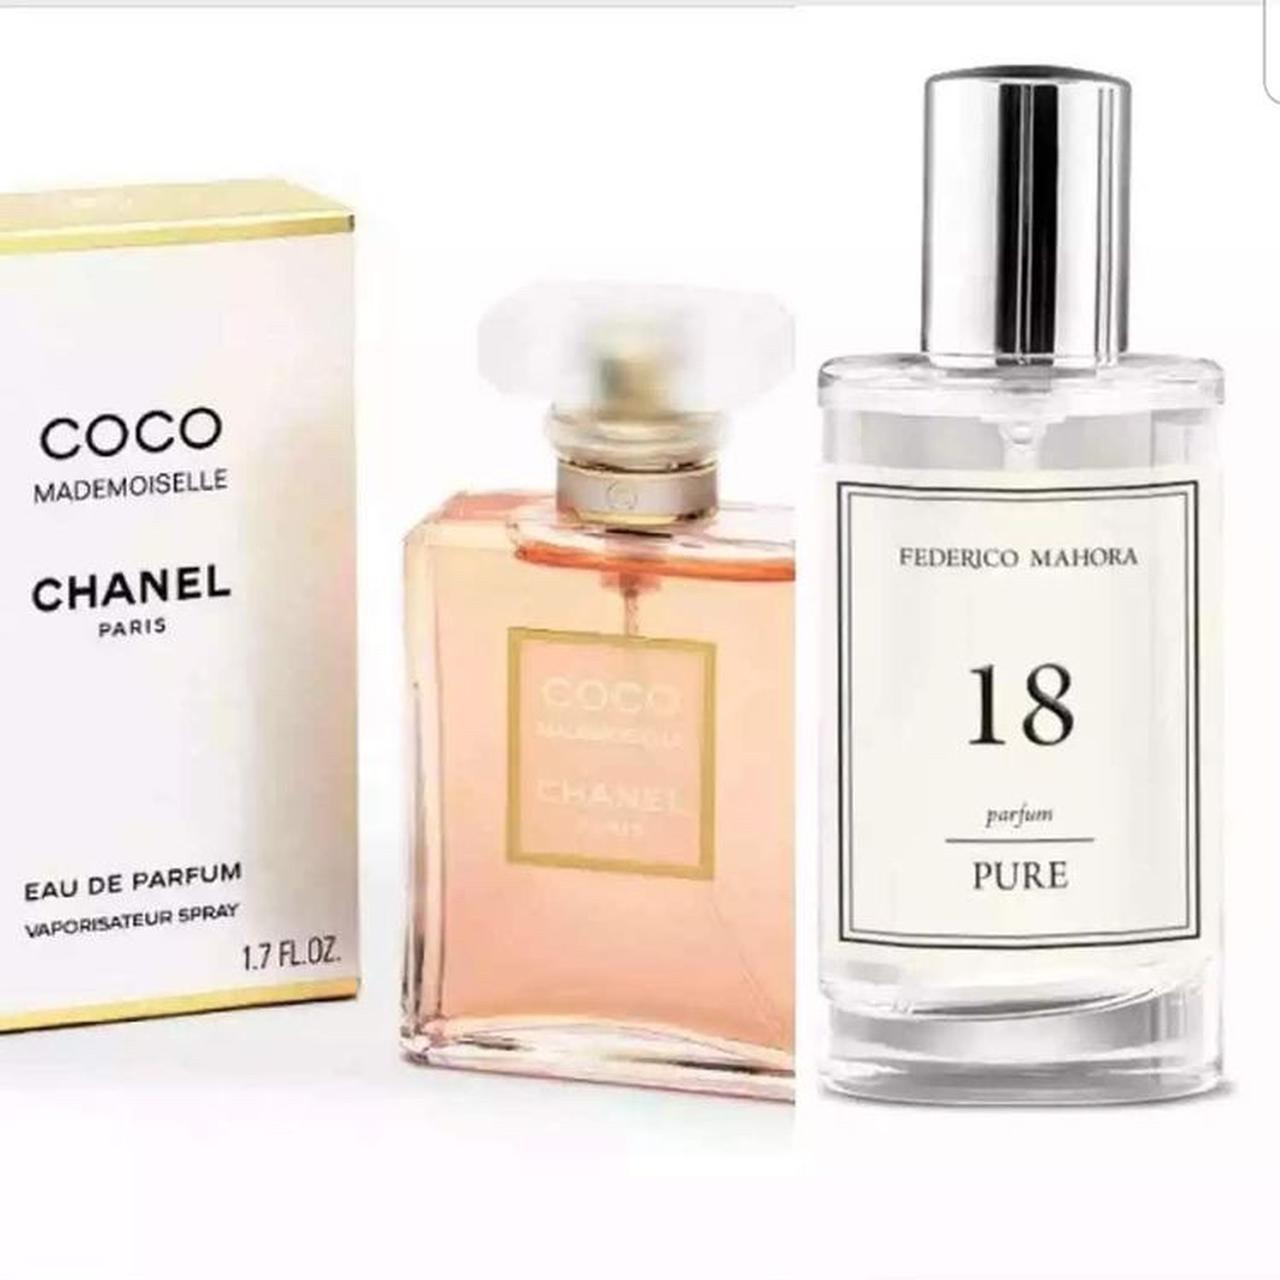 FM 18 -Eau de perfume -inspired by Chanel - Coco - Depop